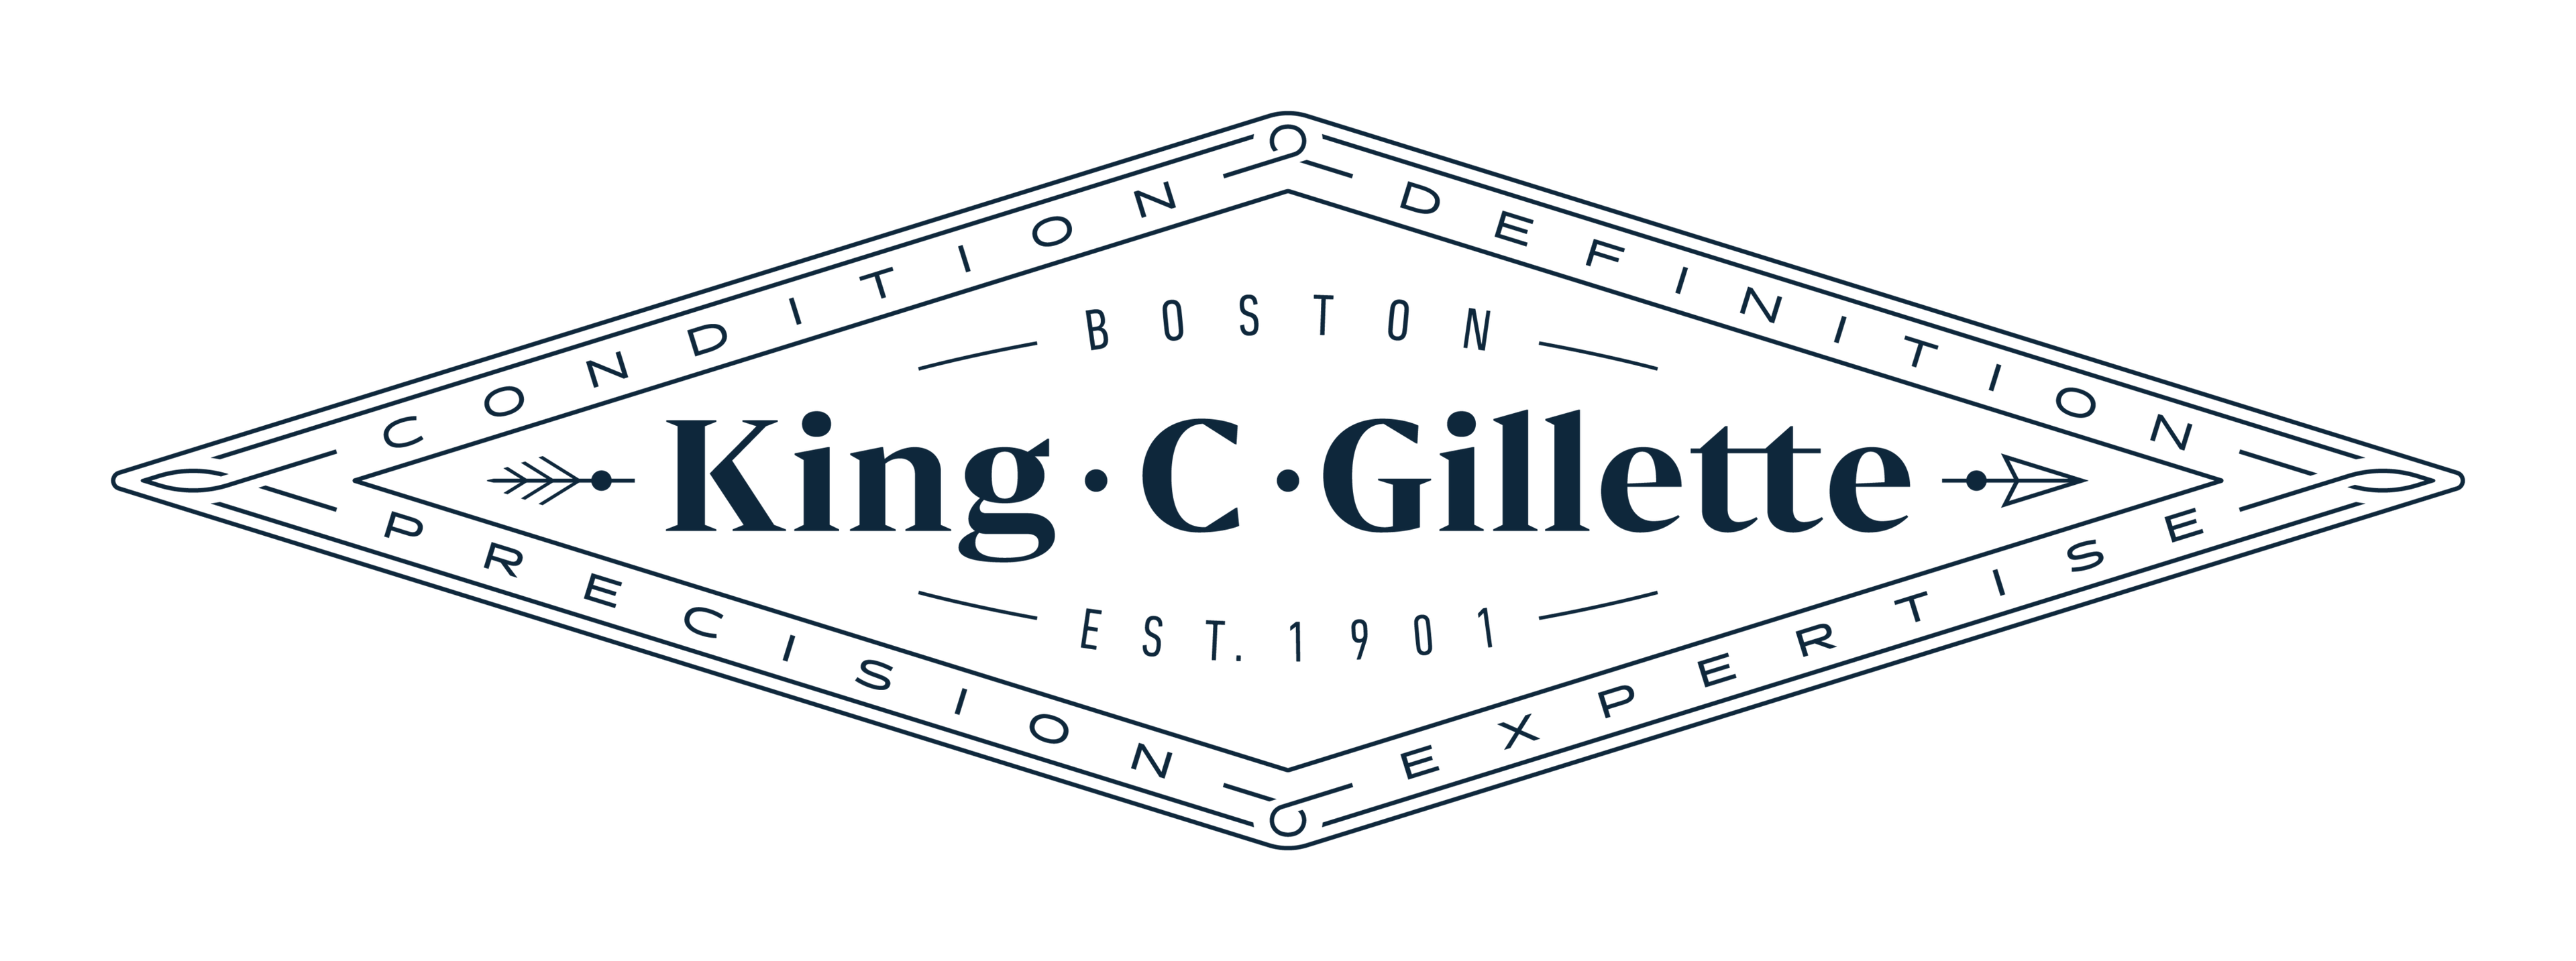 King C Gillette logotype